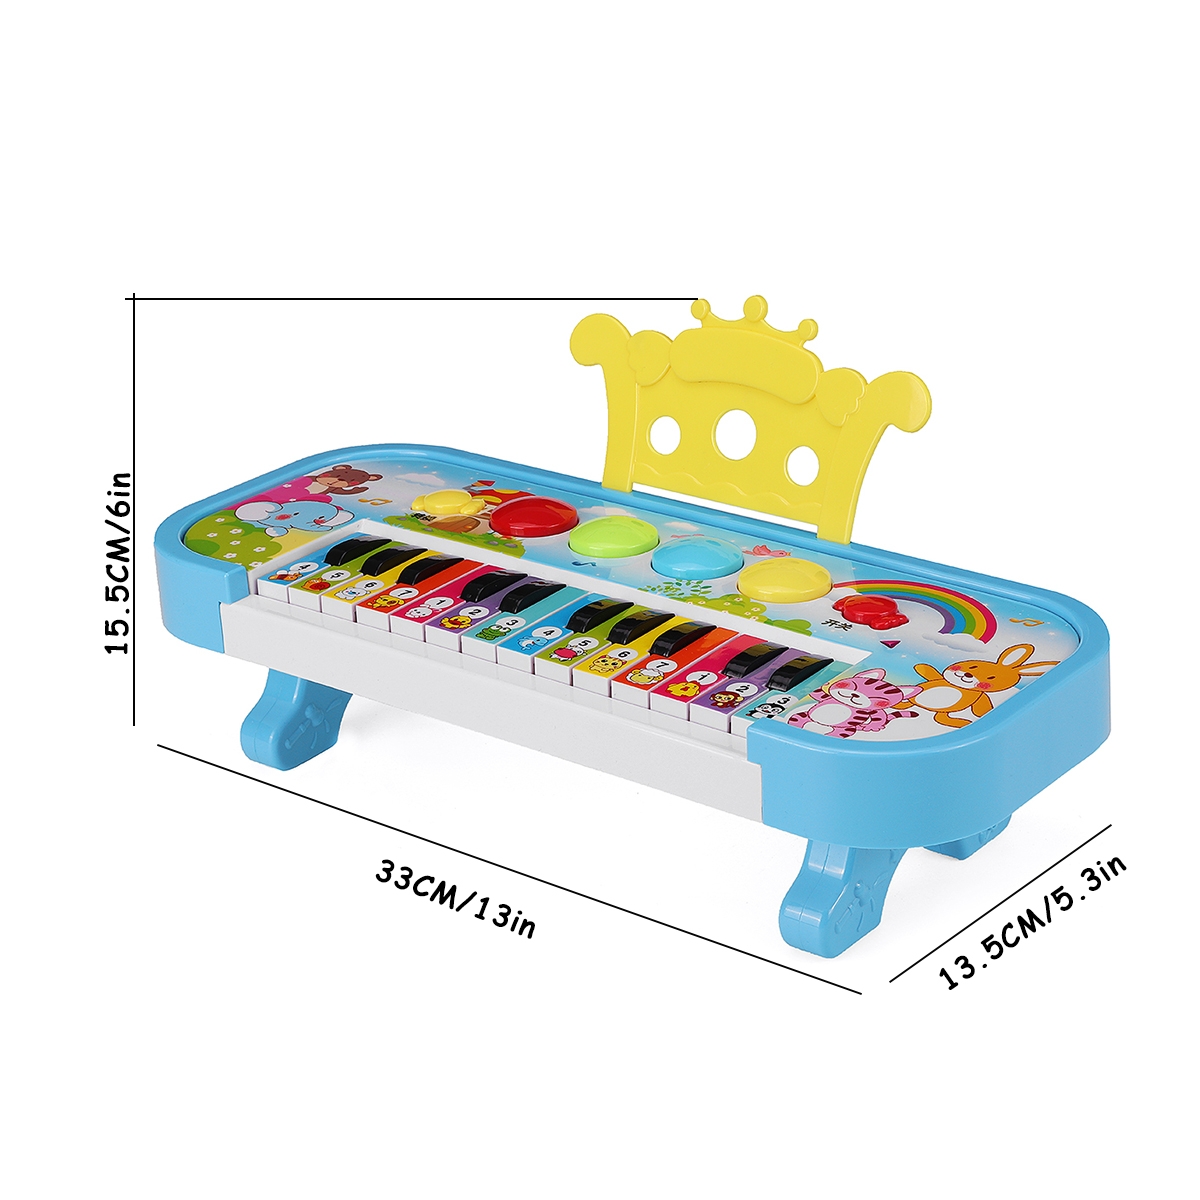 24 Key Electronic Keyboard Toddler Preschool Music Learning Educational Kids Toy